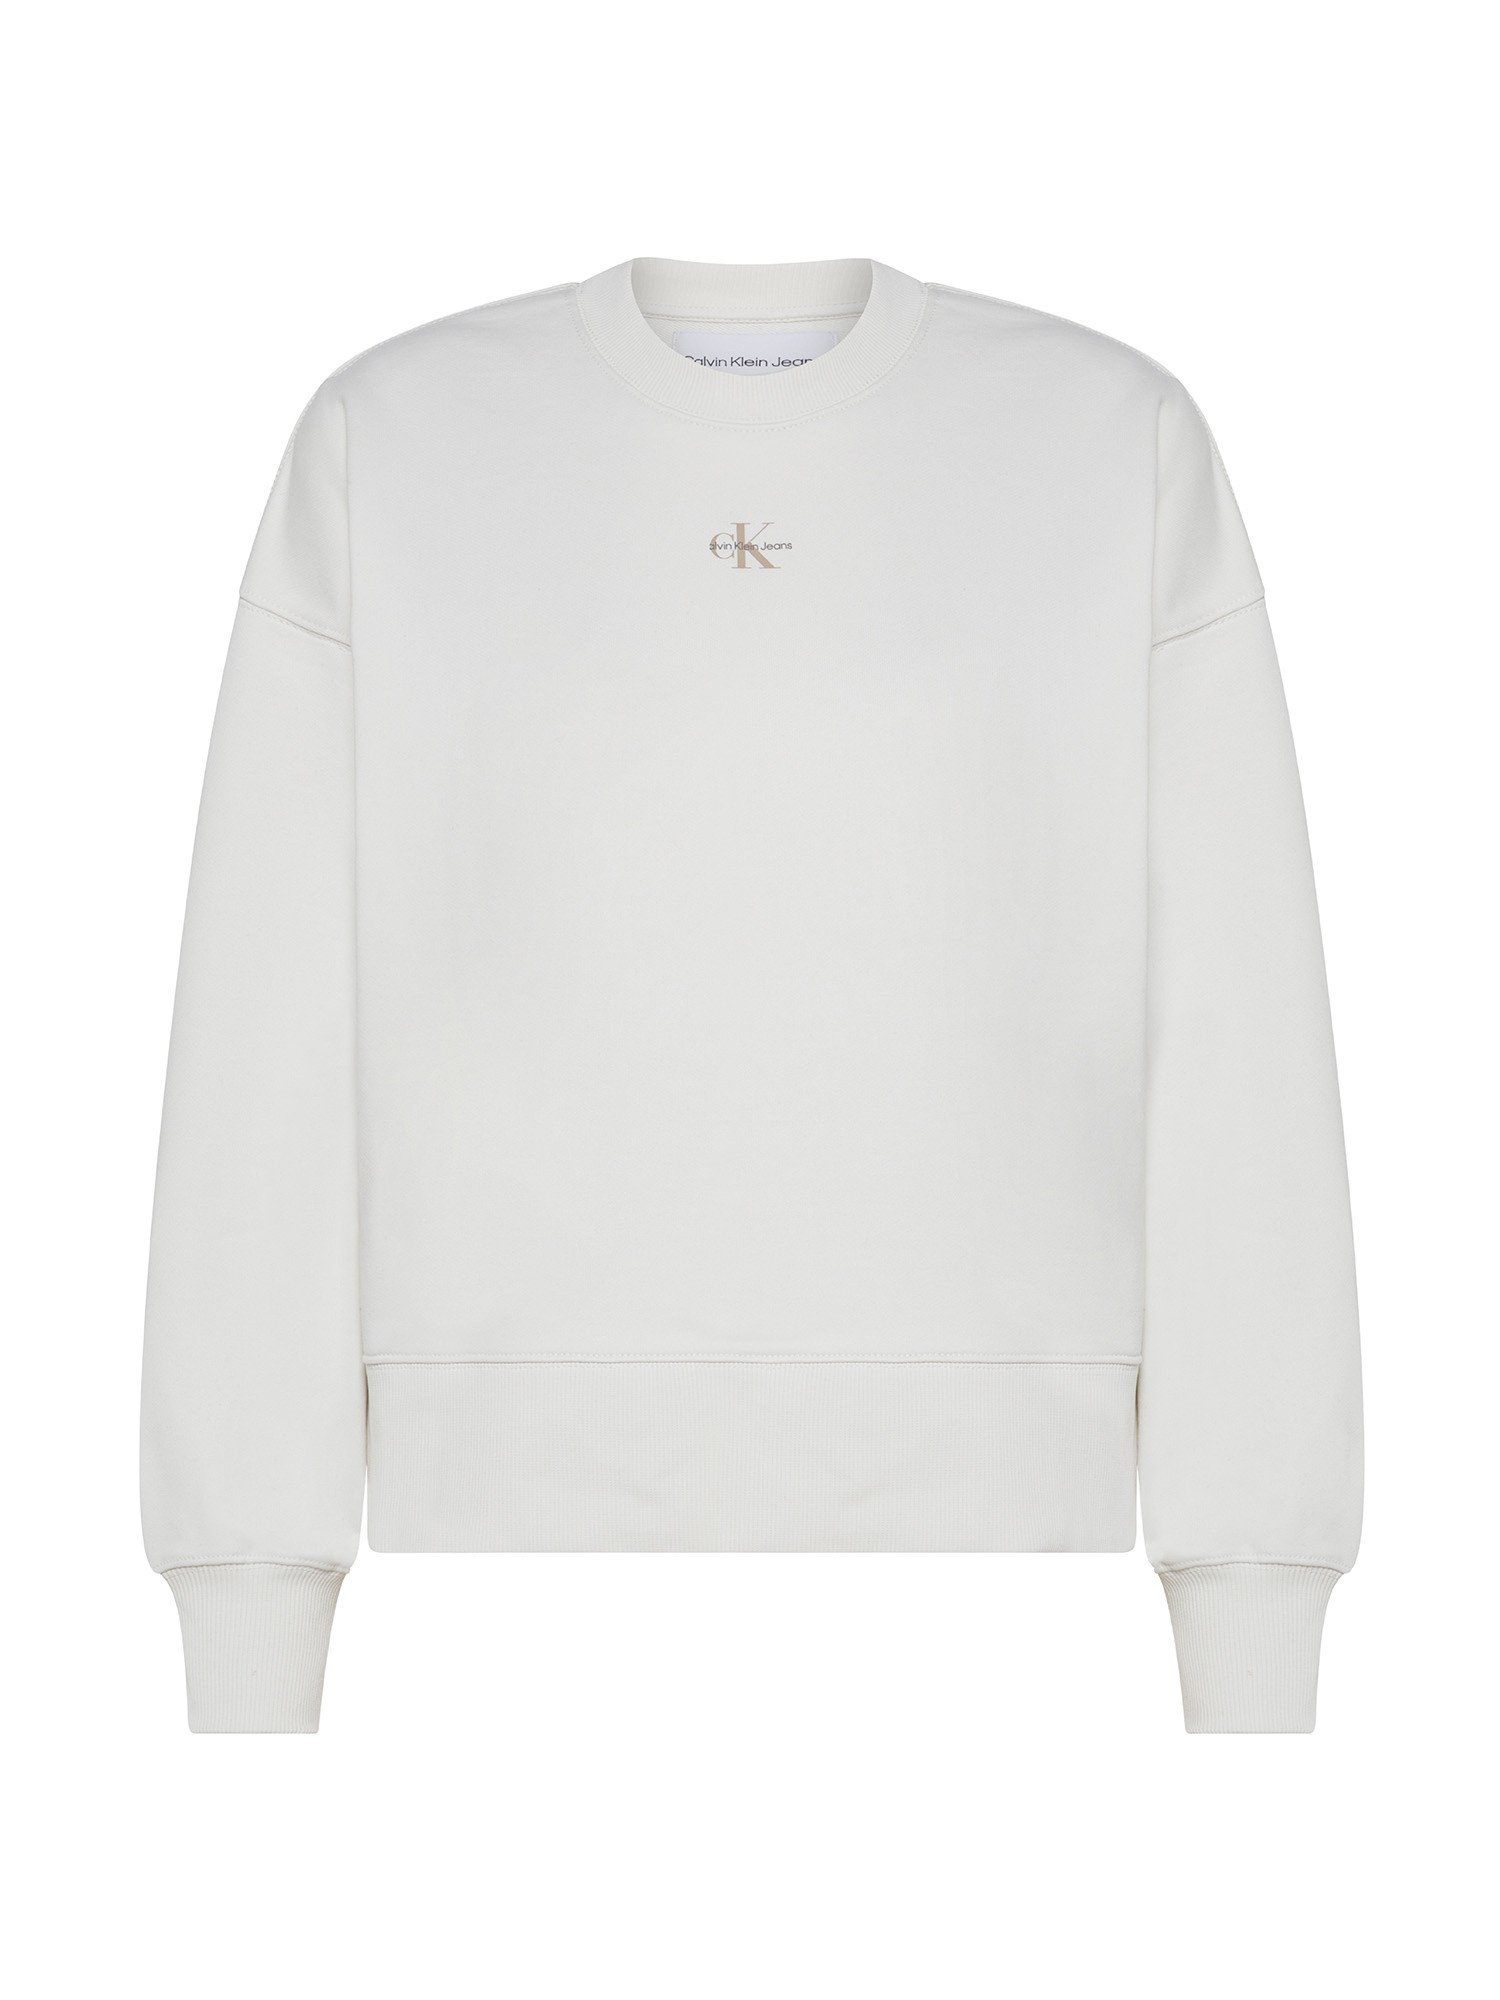 Calvin Klein Jeans - Felpa in cotone con logo, Bianco avorio, large image number 0